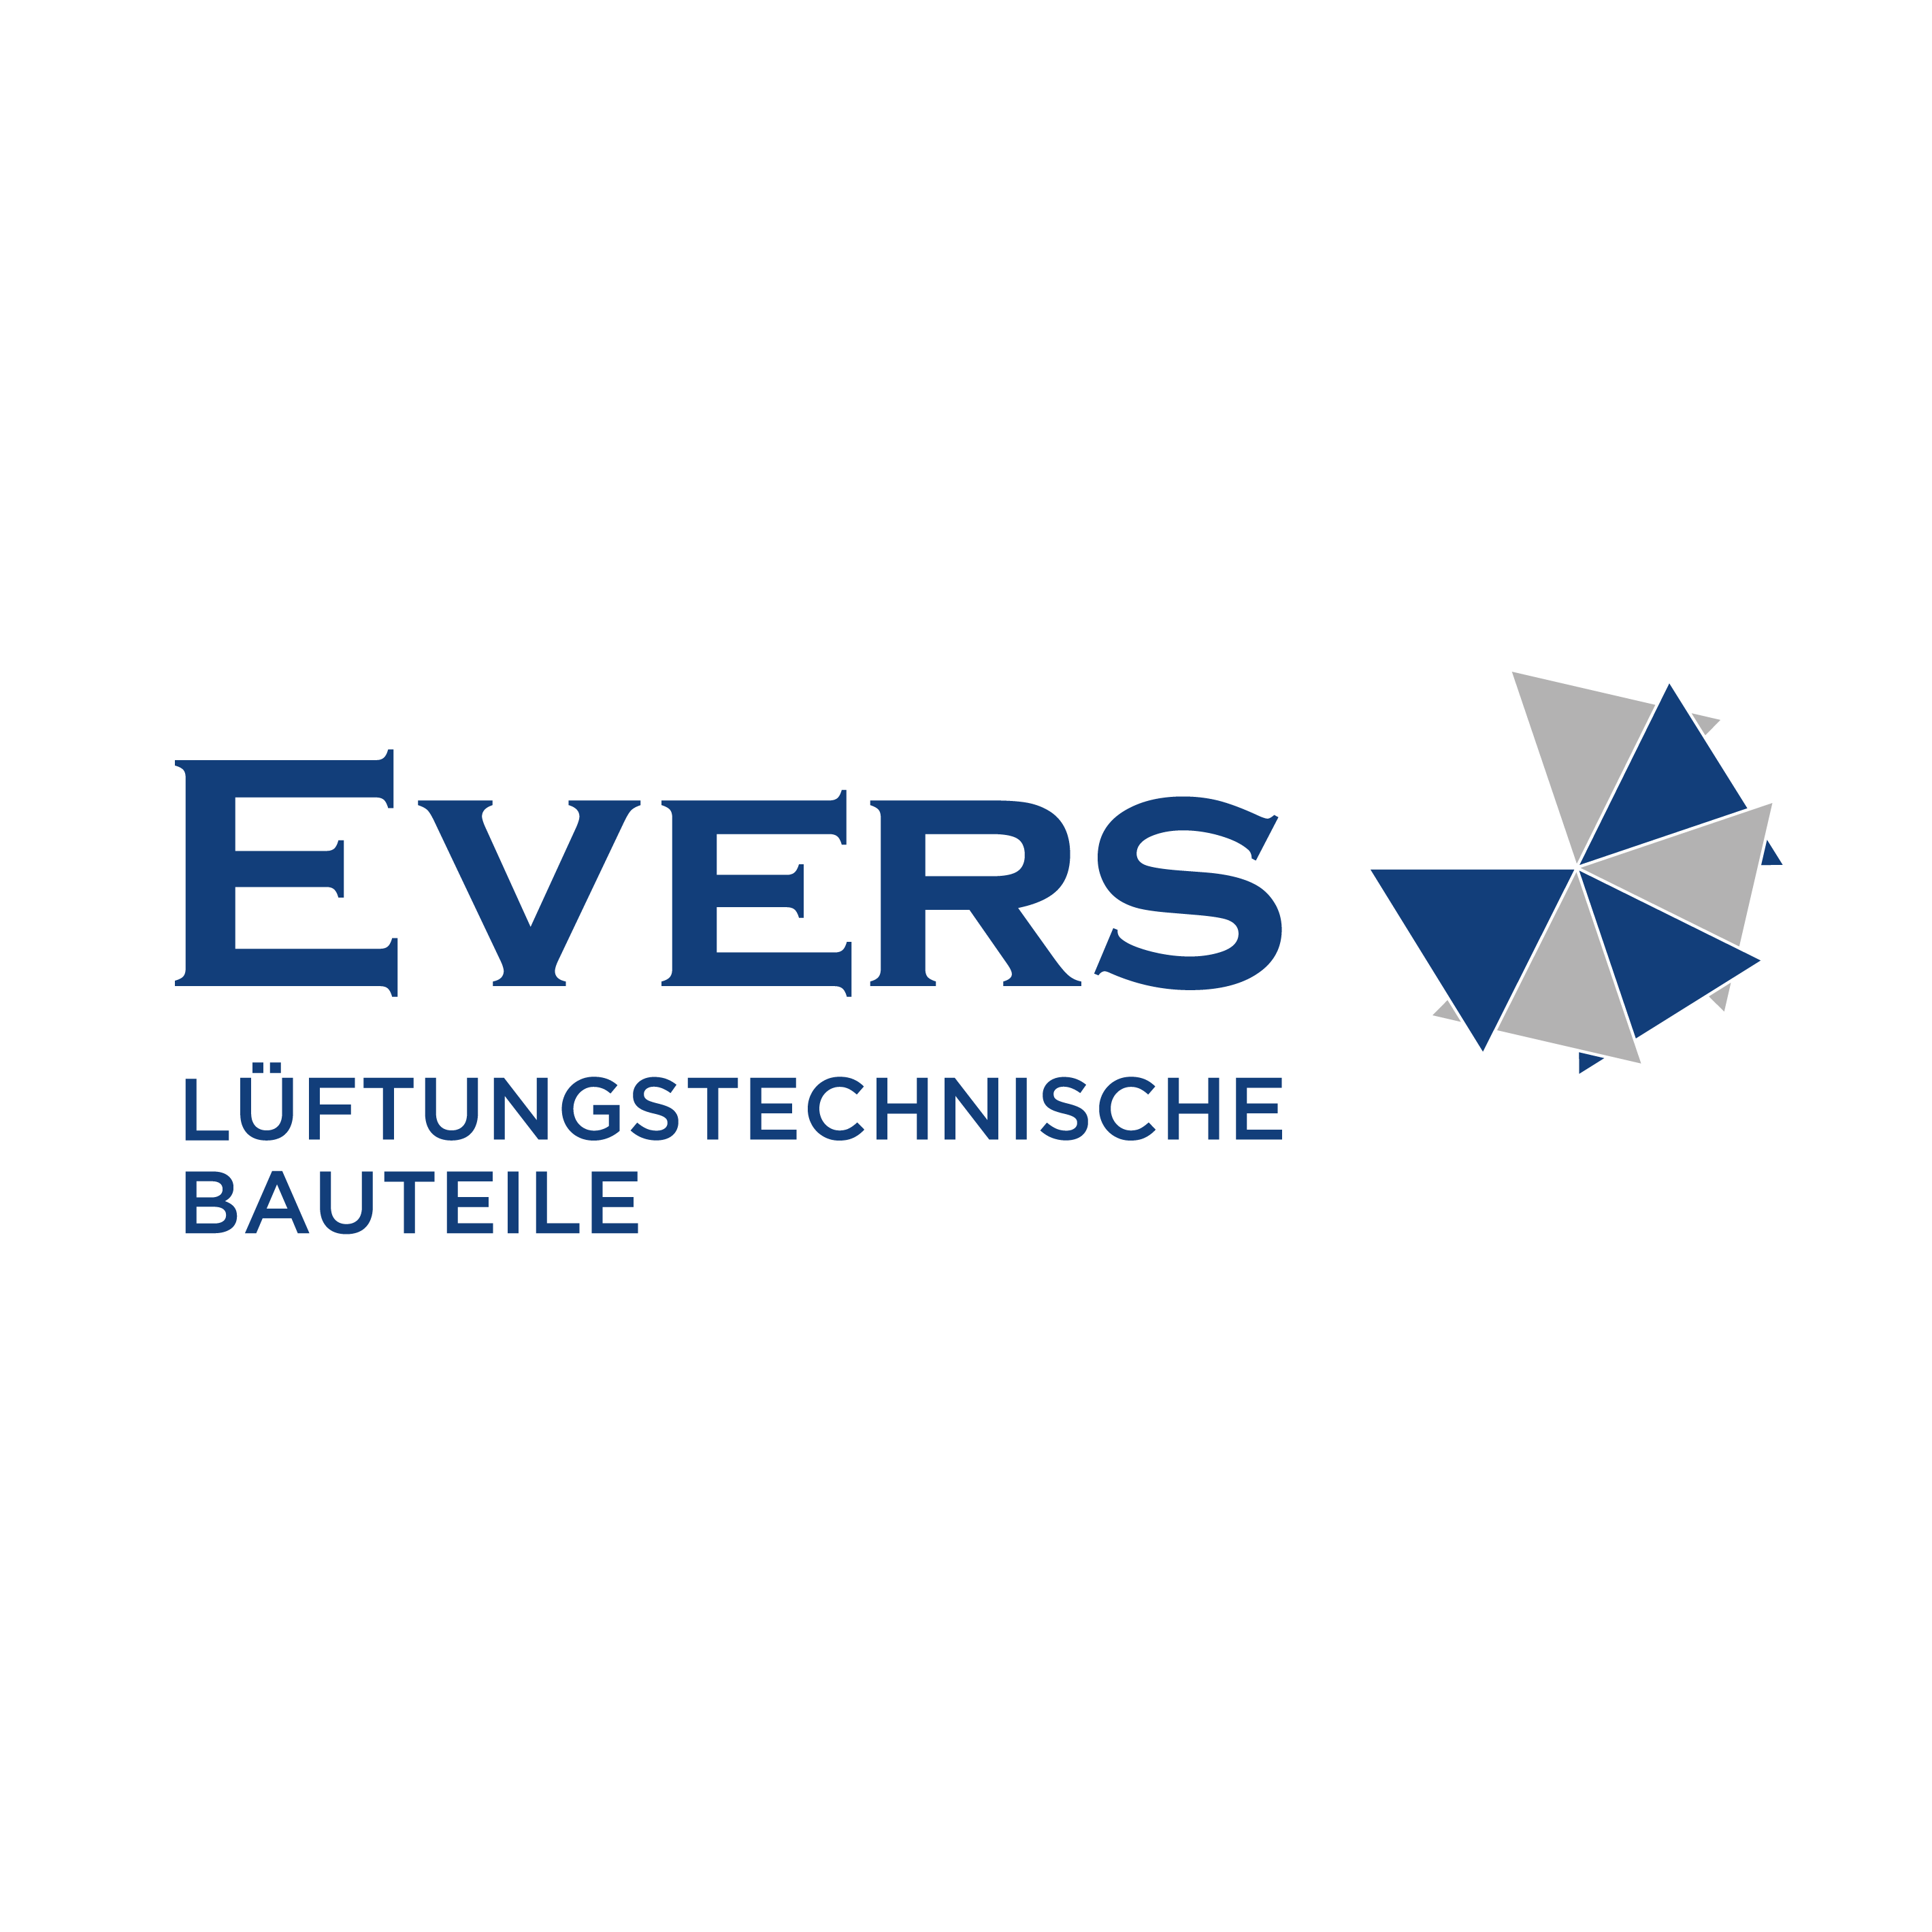 Logo Evers Metallbau GmbH